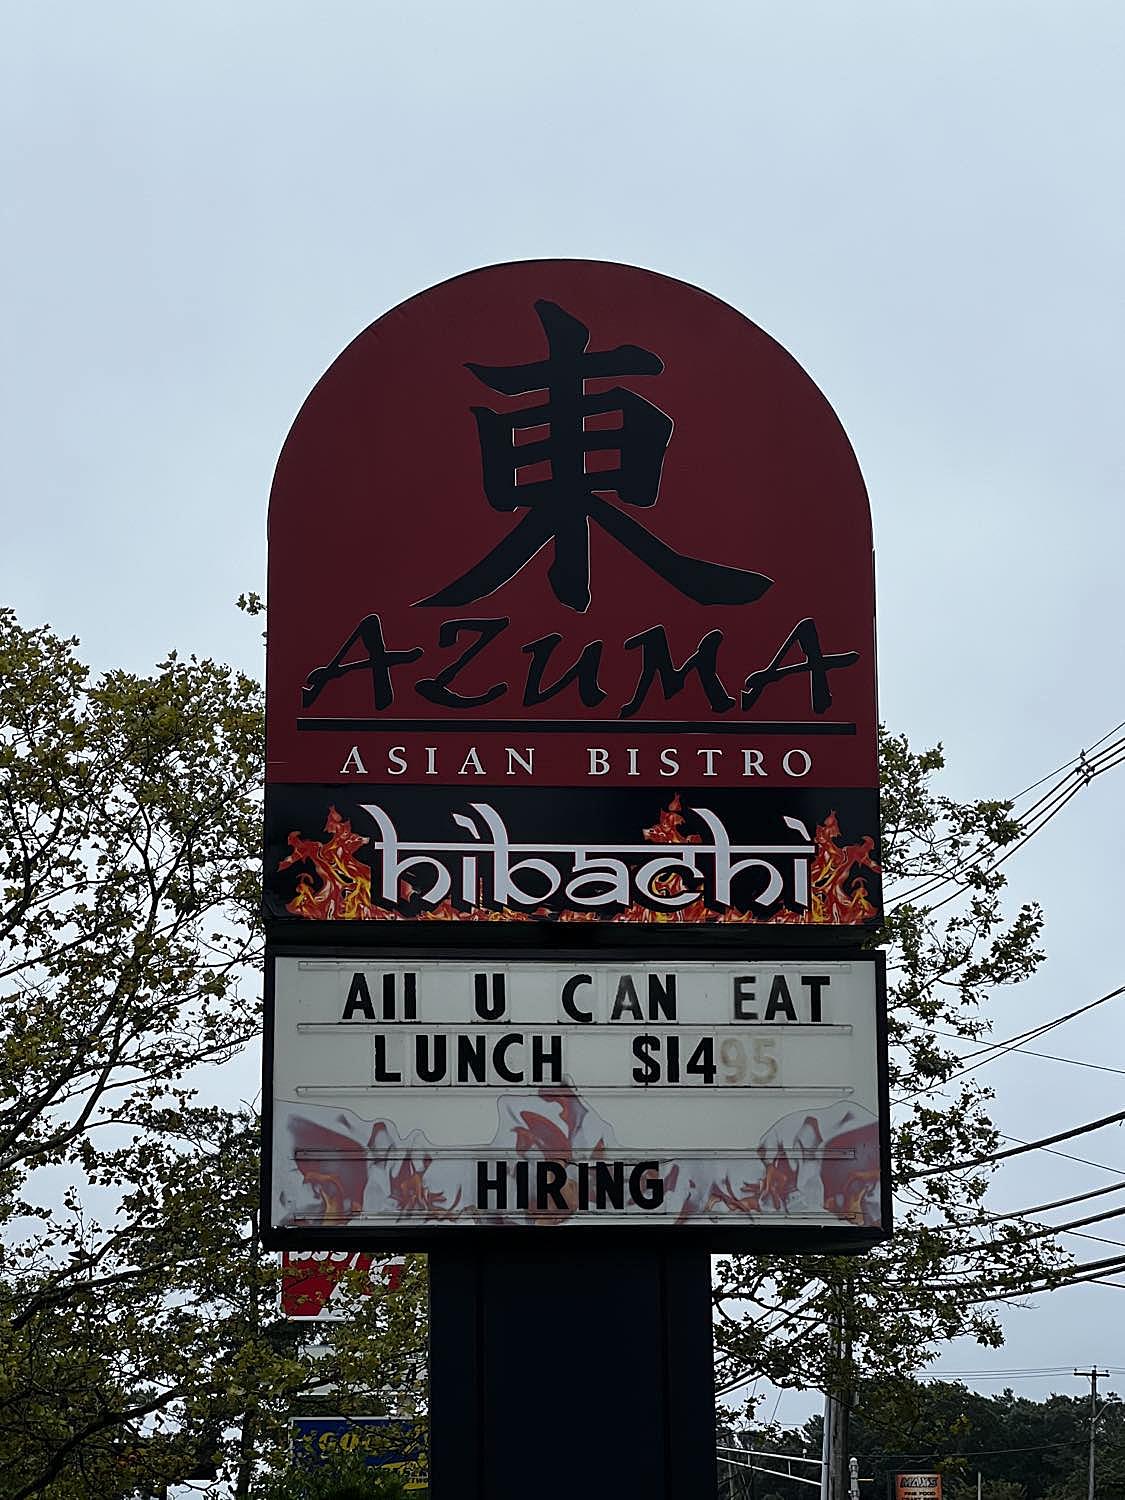 New Orange restaurant brings hot pot and Korean BBQ to Connecticut